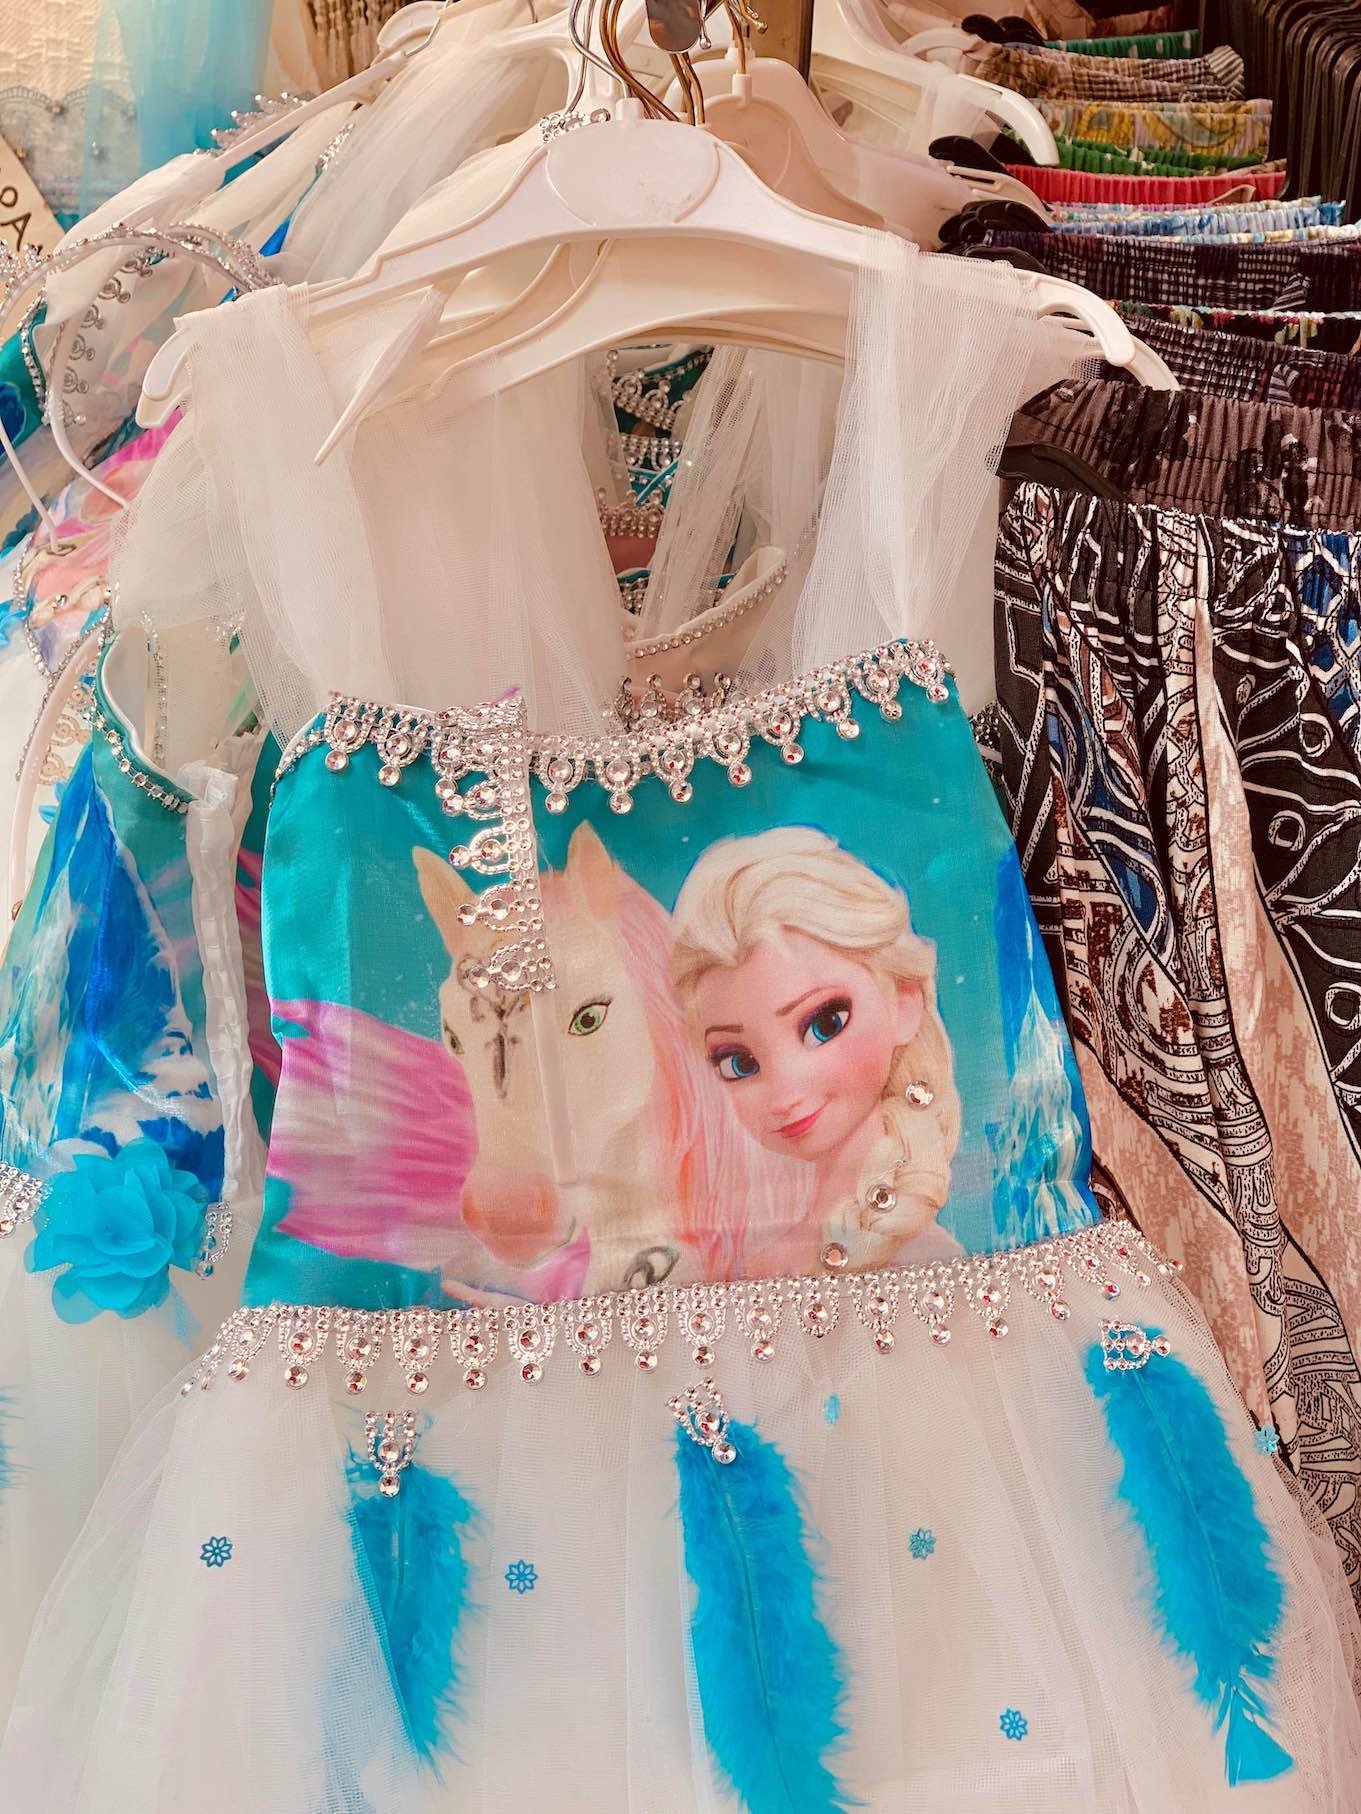 Elsa Frozen dress.